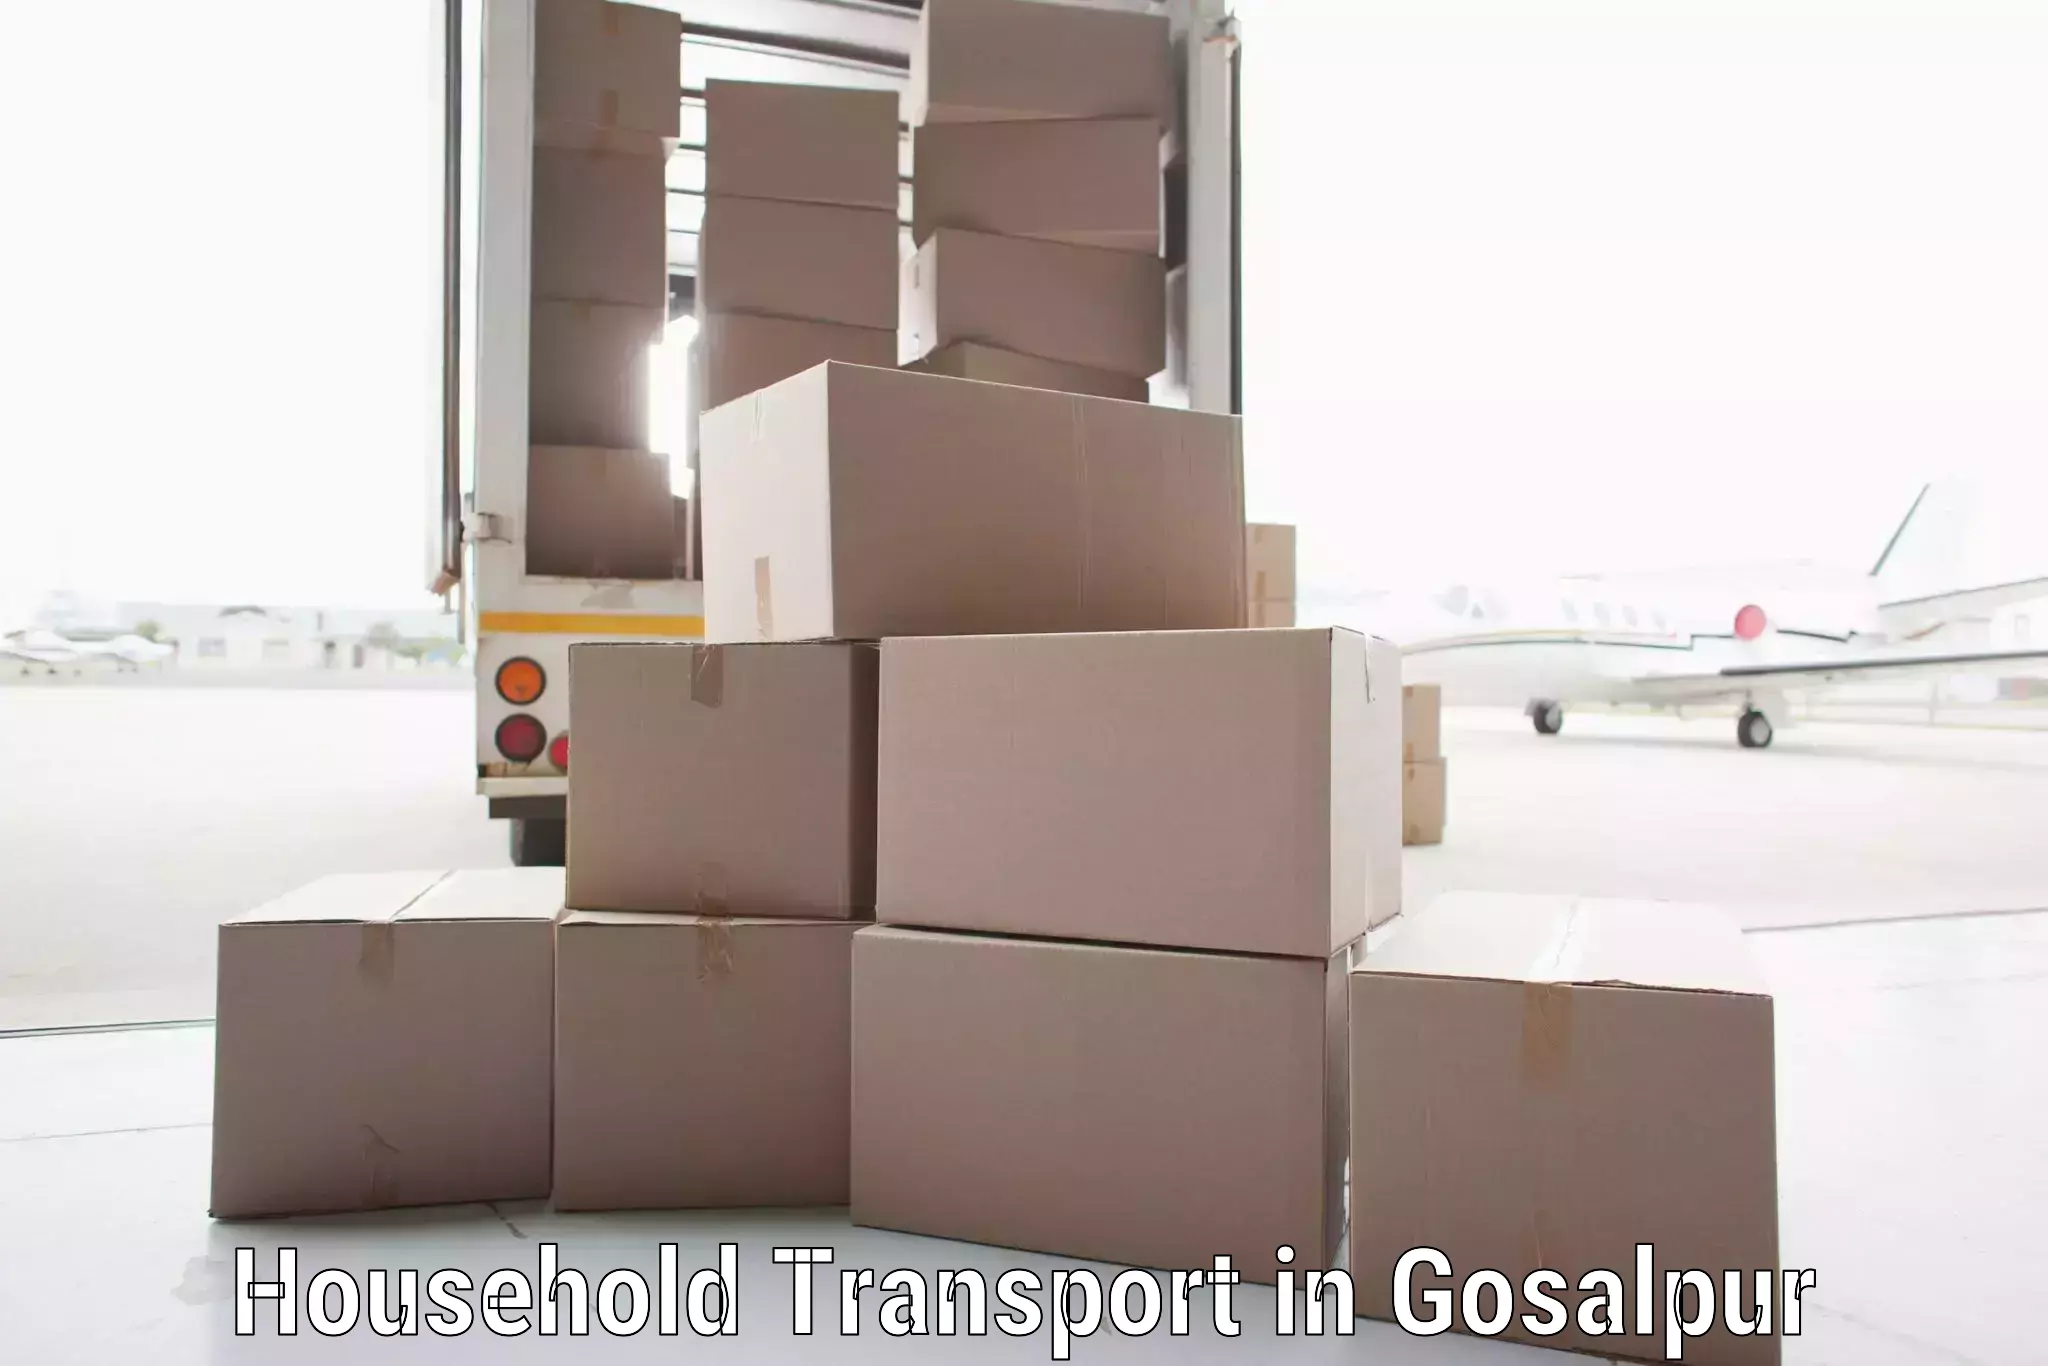 Professional goods transport in Gosalpur